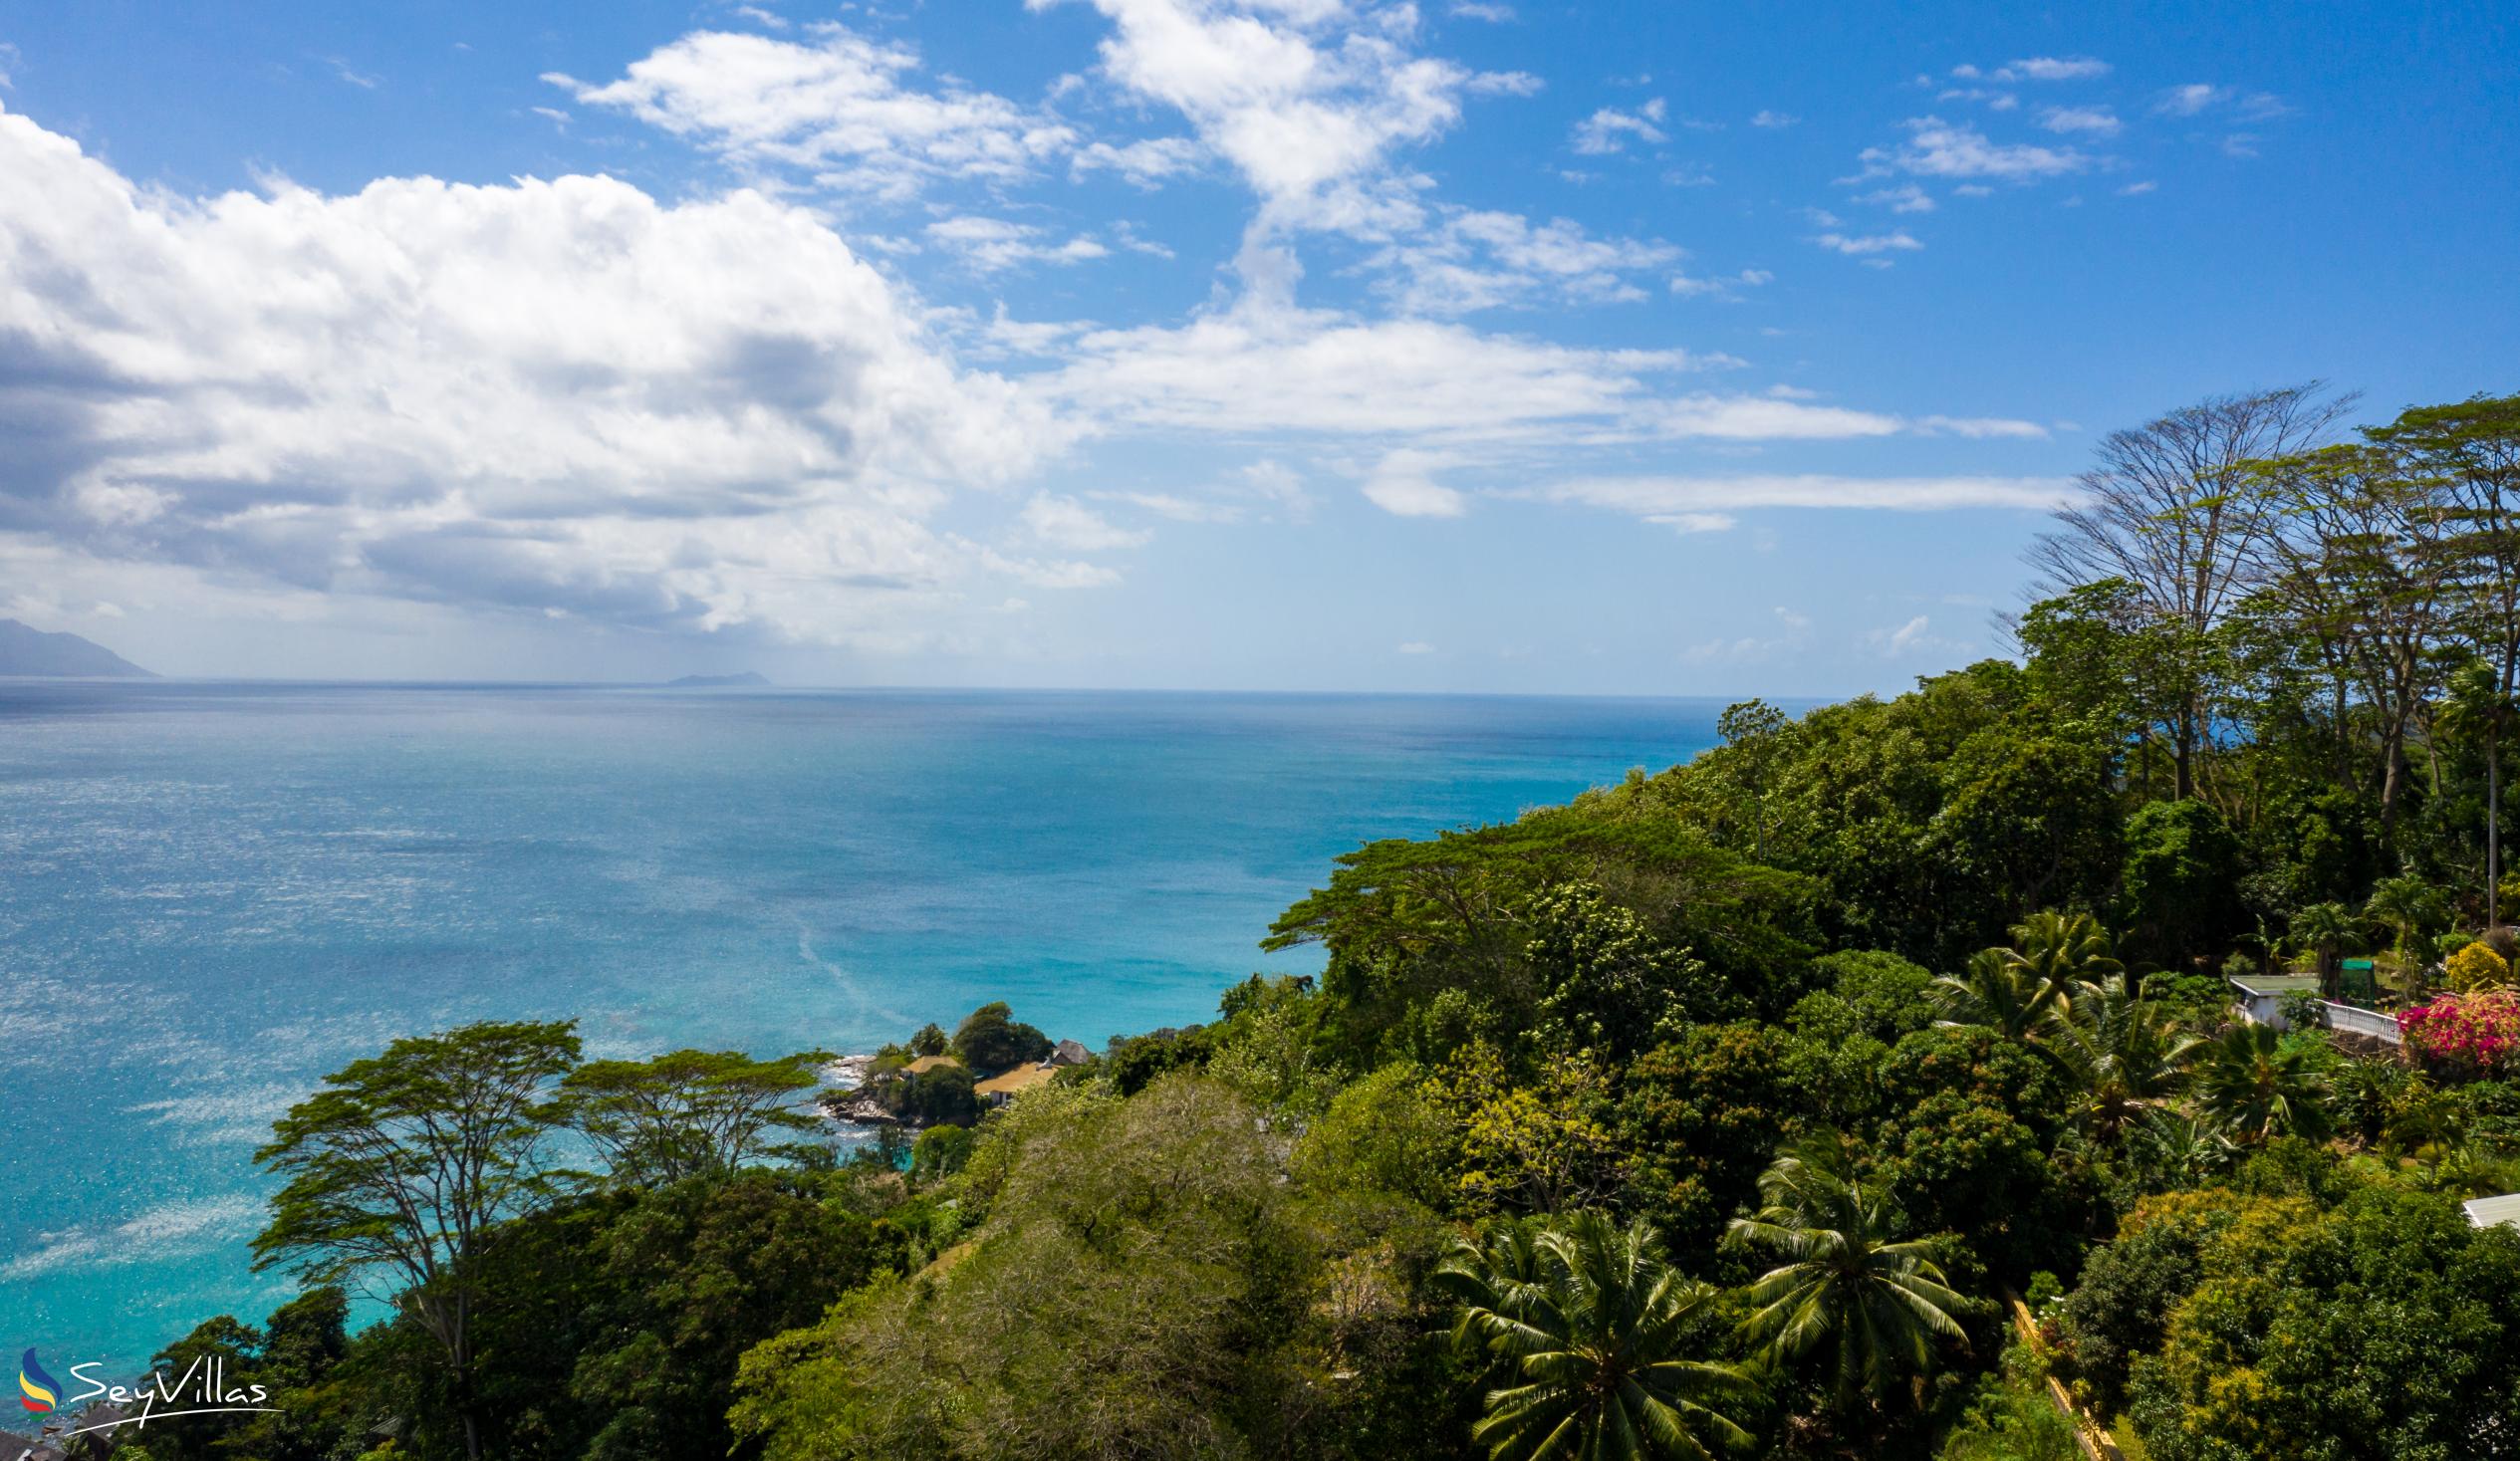 Foto 21: Reve Bleu - Location - Mahé (Seychelles)